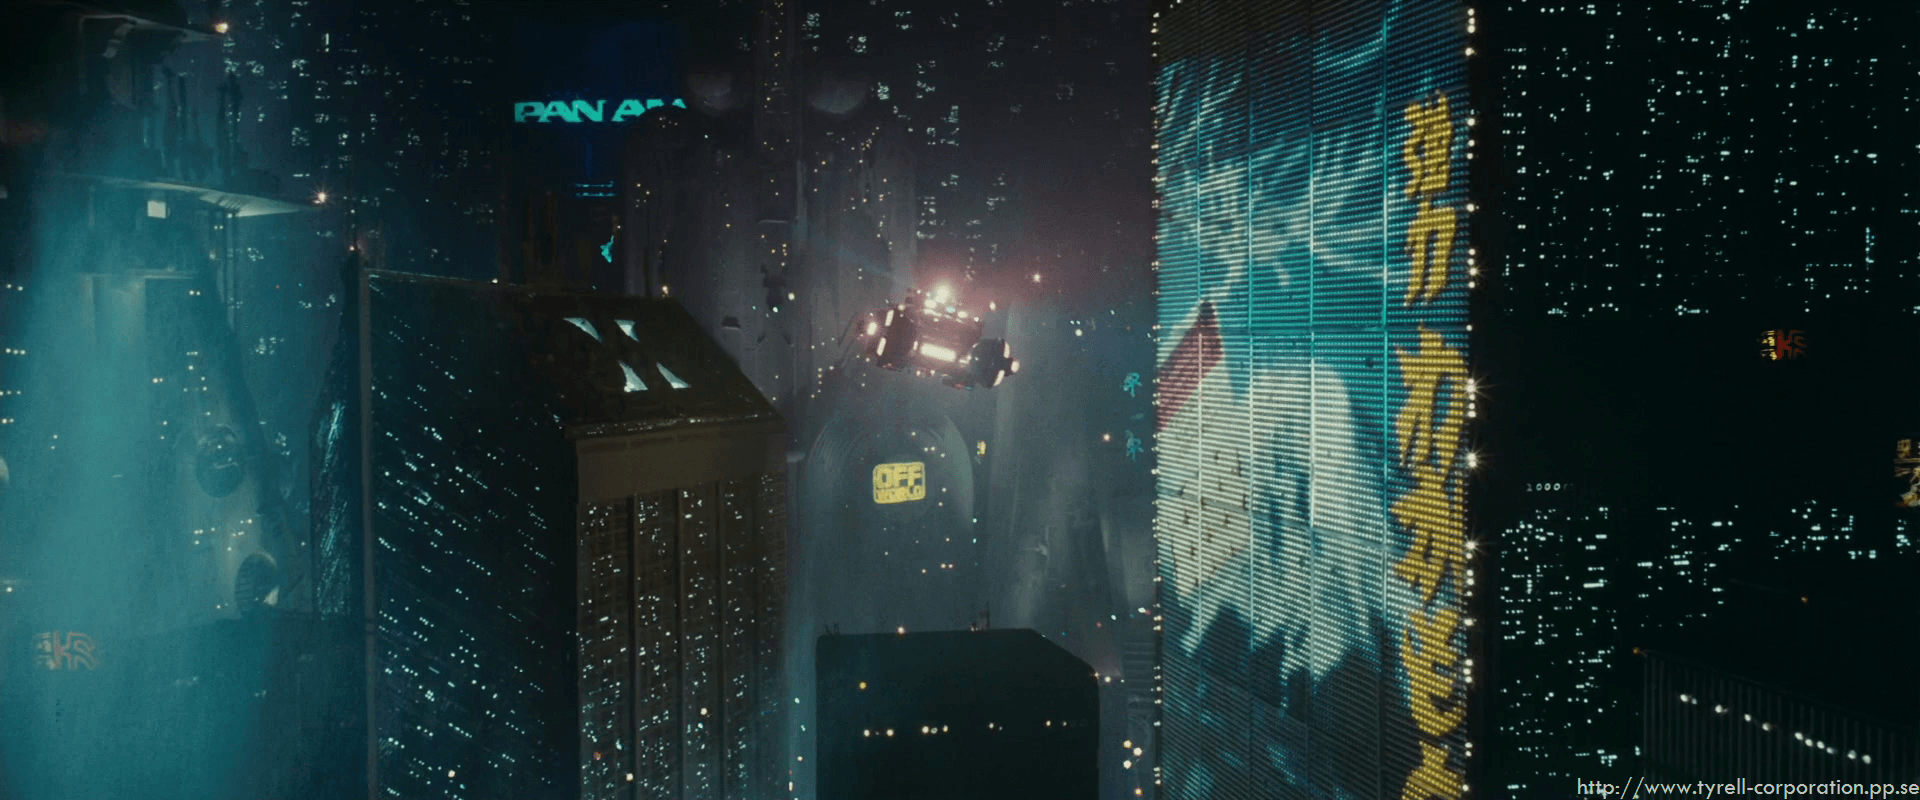 Blade Runner 1920×800 Wallpaper 772053